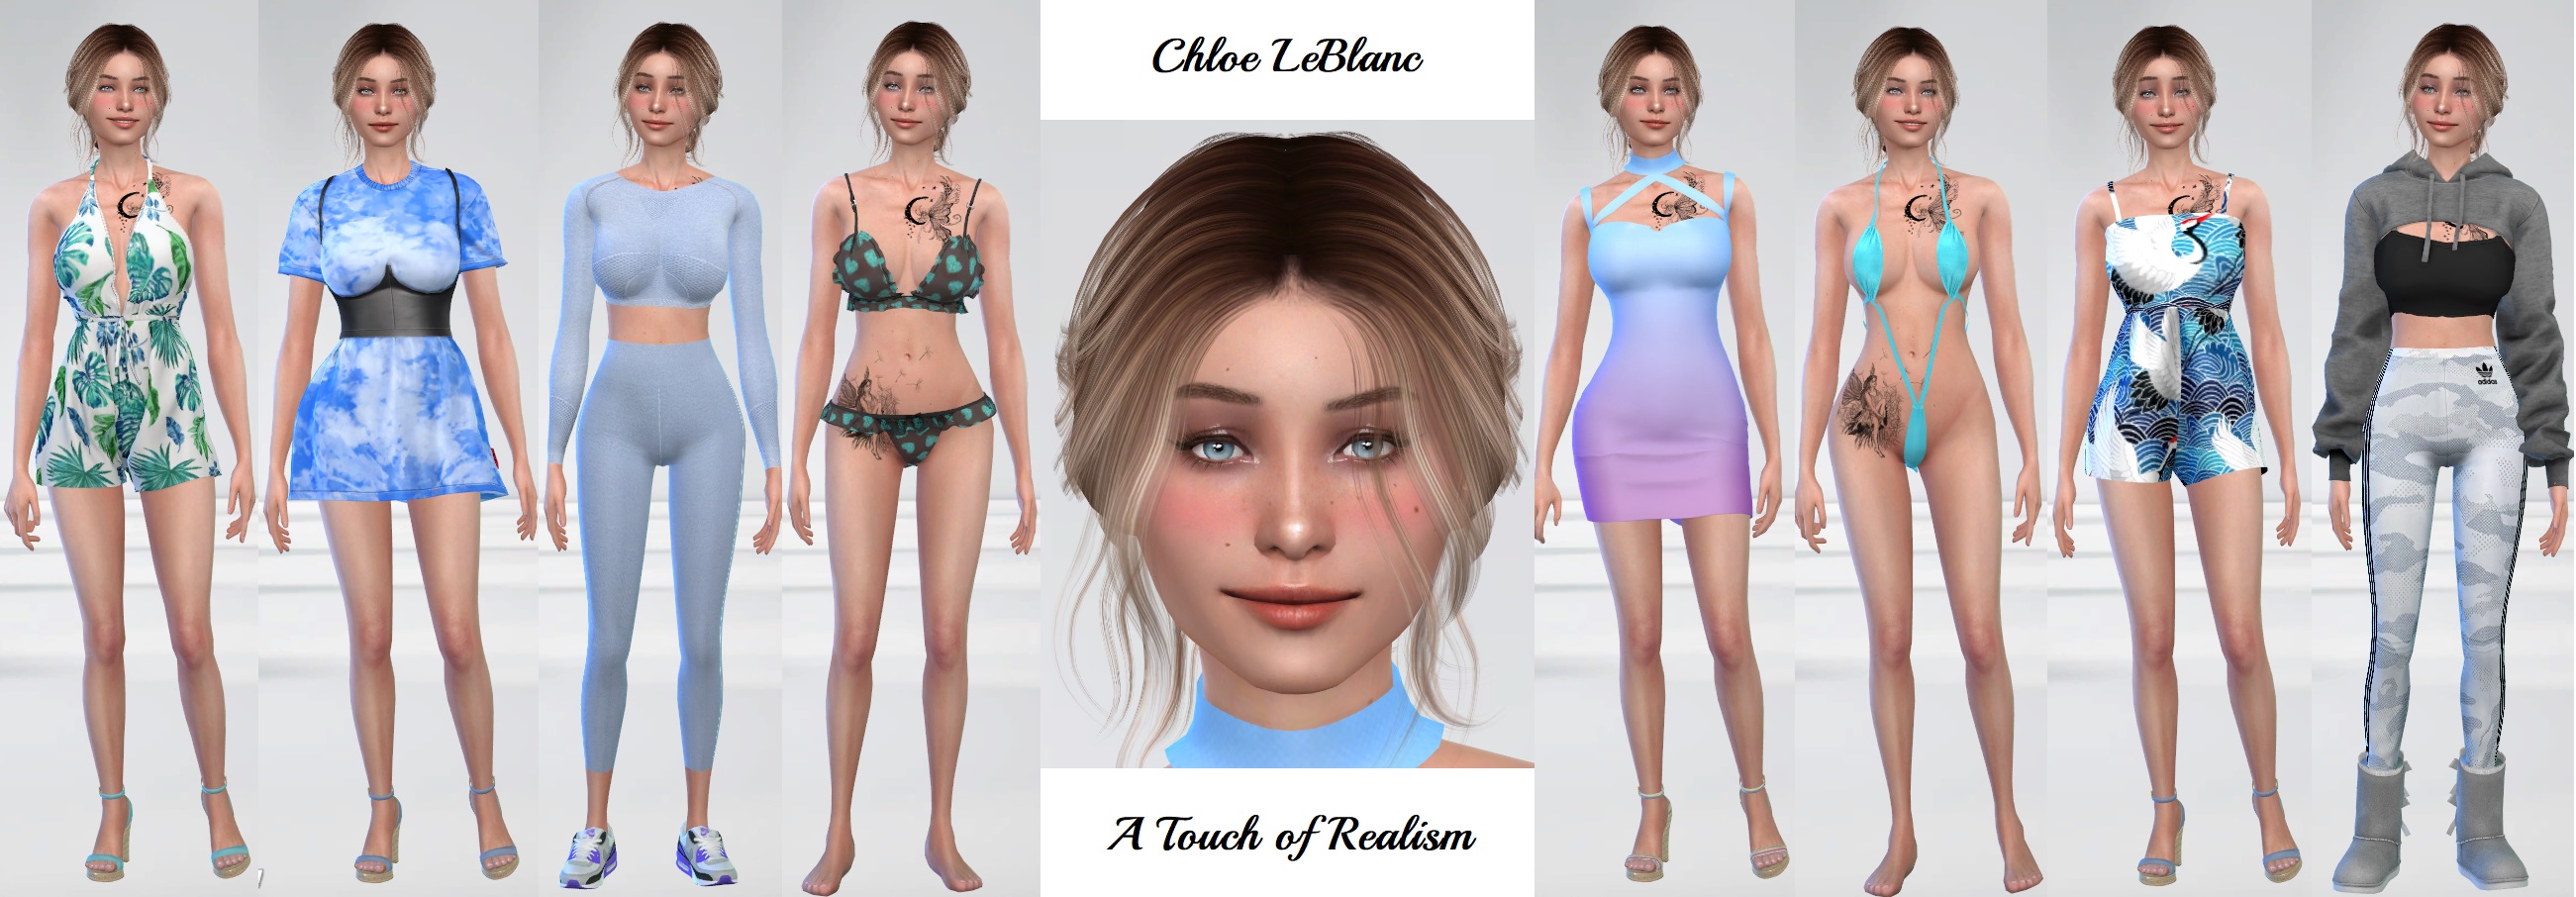 Original Sim Chloe LeBlanc!